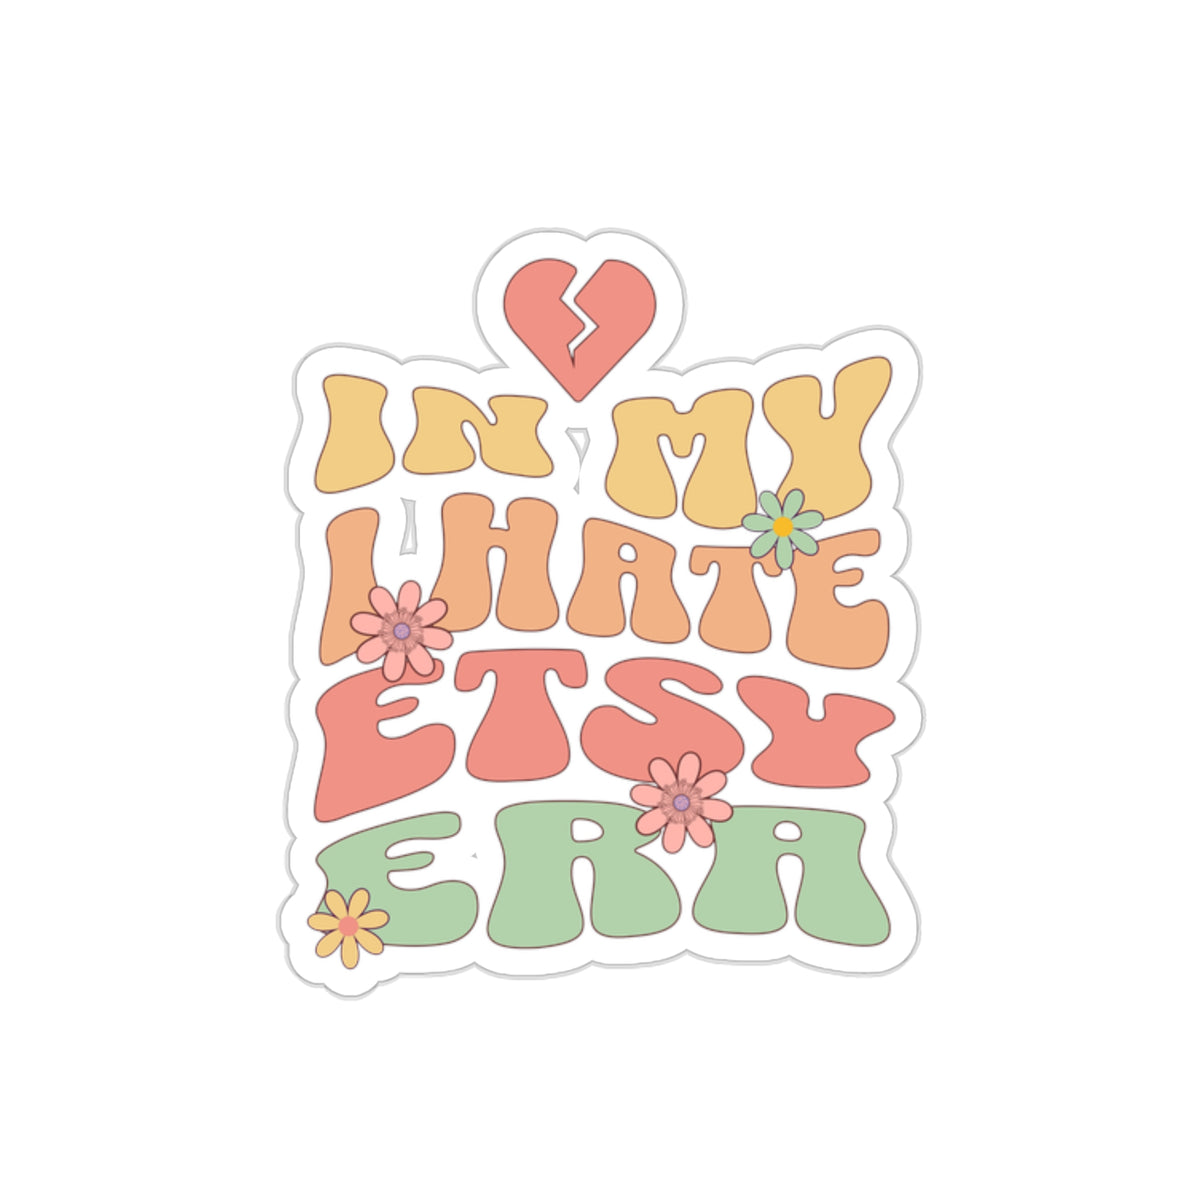 In My I Hate Etsy Era Funny Etsy Seller Vinyl Sticker | Kiss-Cut Stickers